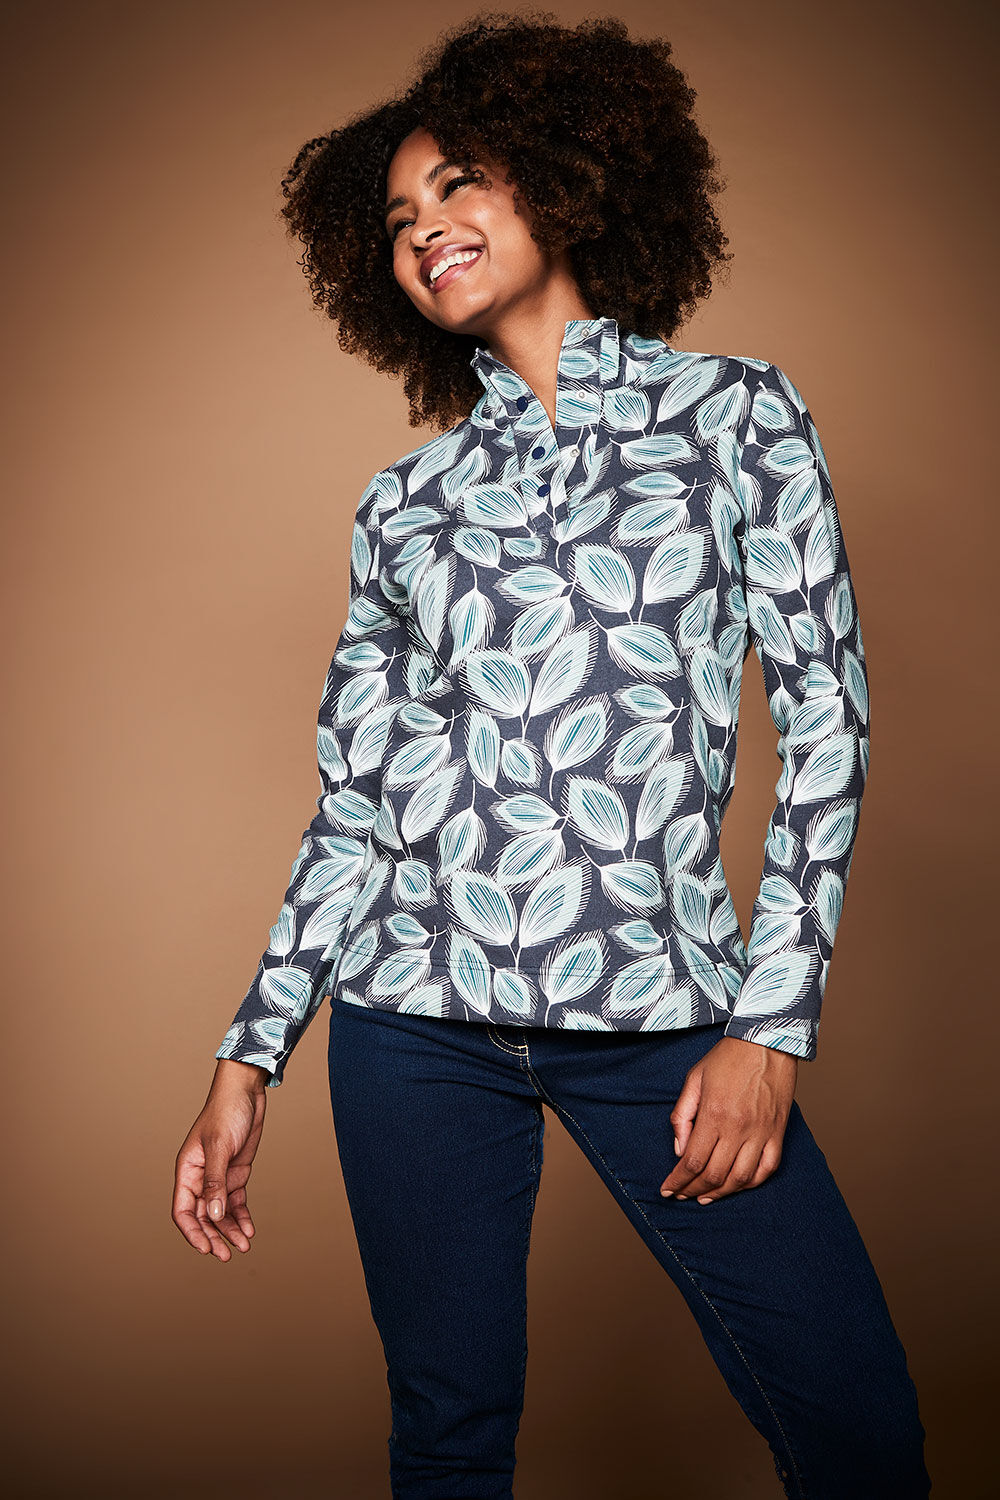 Bonmarche Women’s Navy Blue and White Cotton Leaf Print Long Sleeve Funnel Neck Sweatshirt, Size: 10